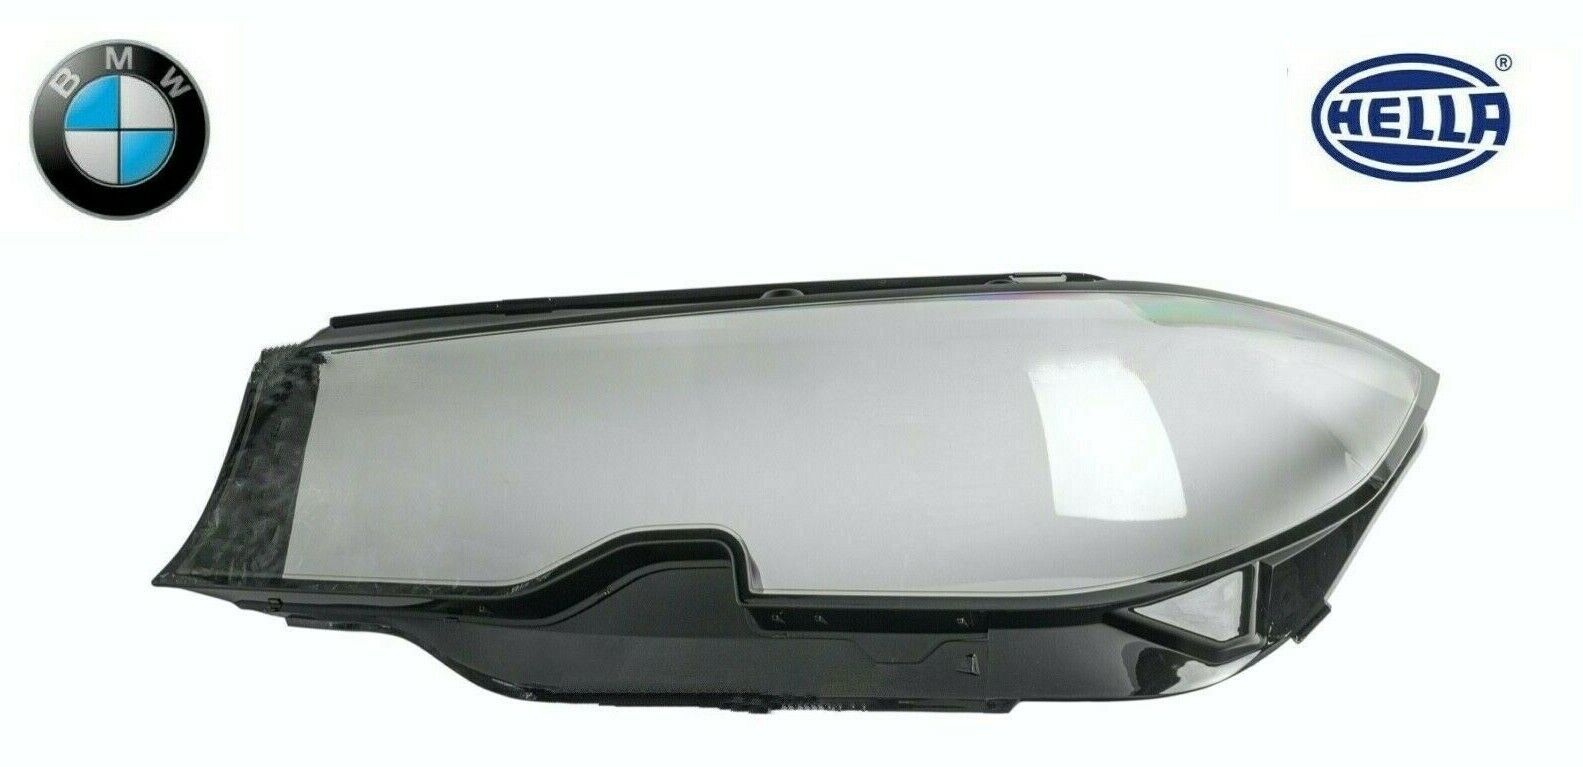 BMW G20 G21 3 SERIES LEFT DRIVER SIDE Headlight Headlamp Lens Cover OEM 18-21 